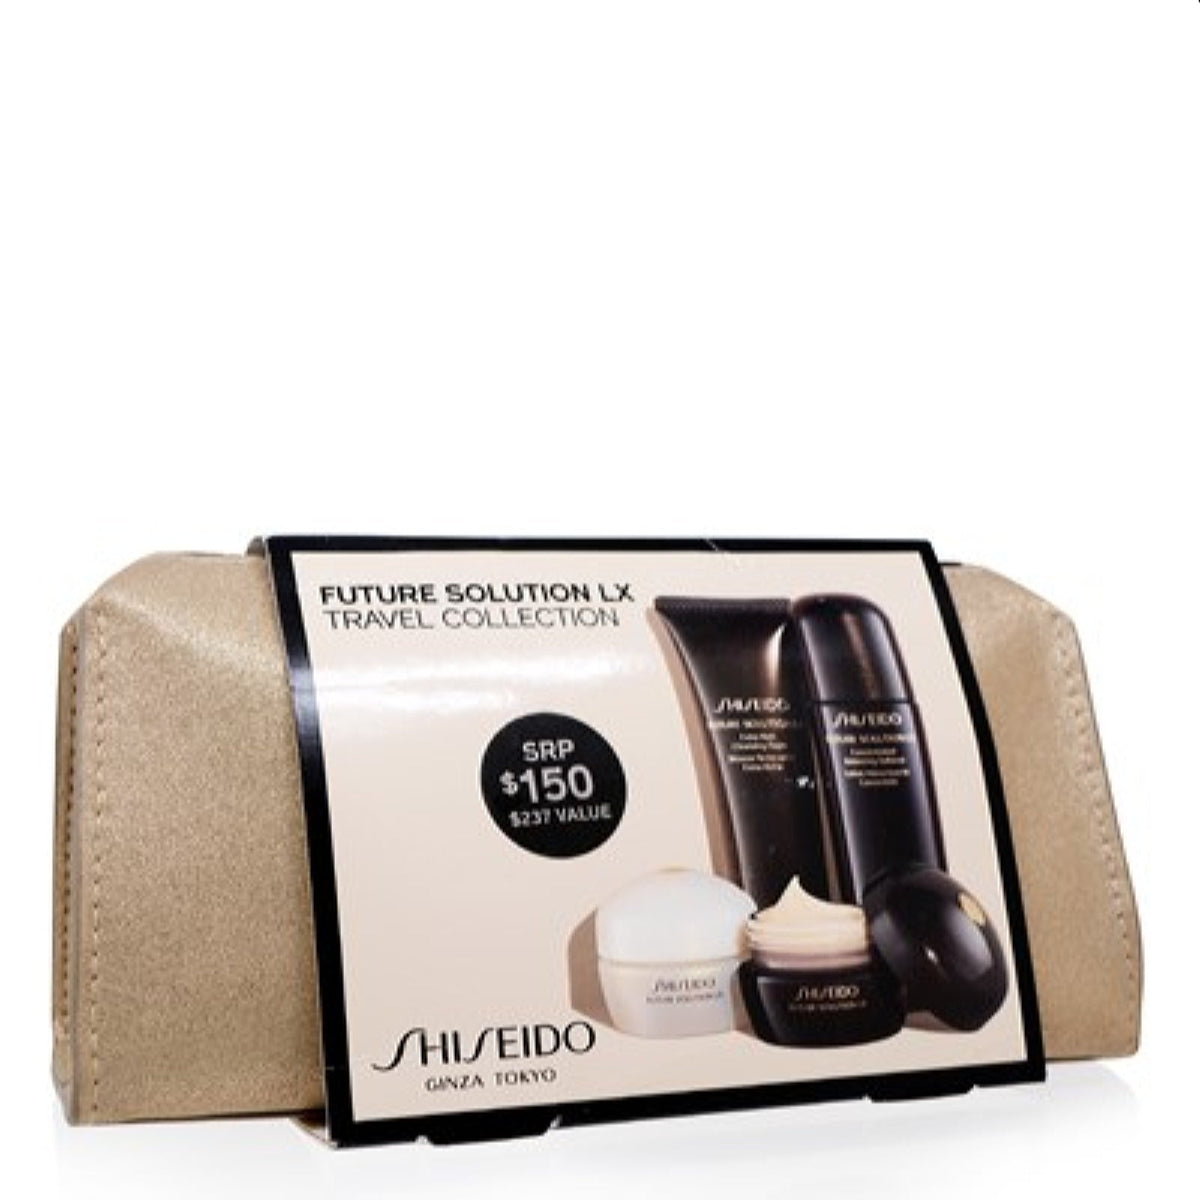 Future Solution Lx Shiseido Travel Collection 72100028101